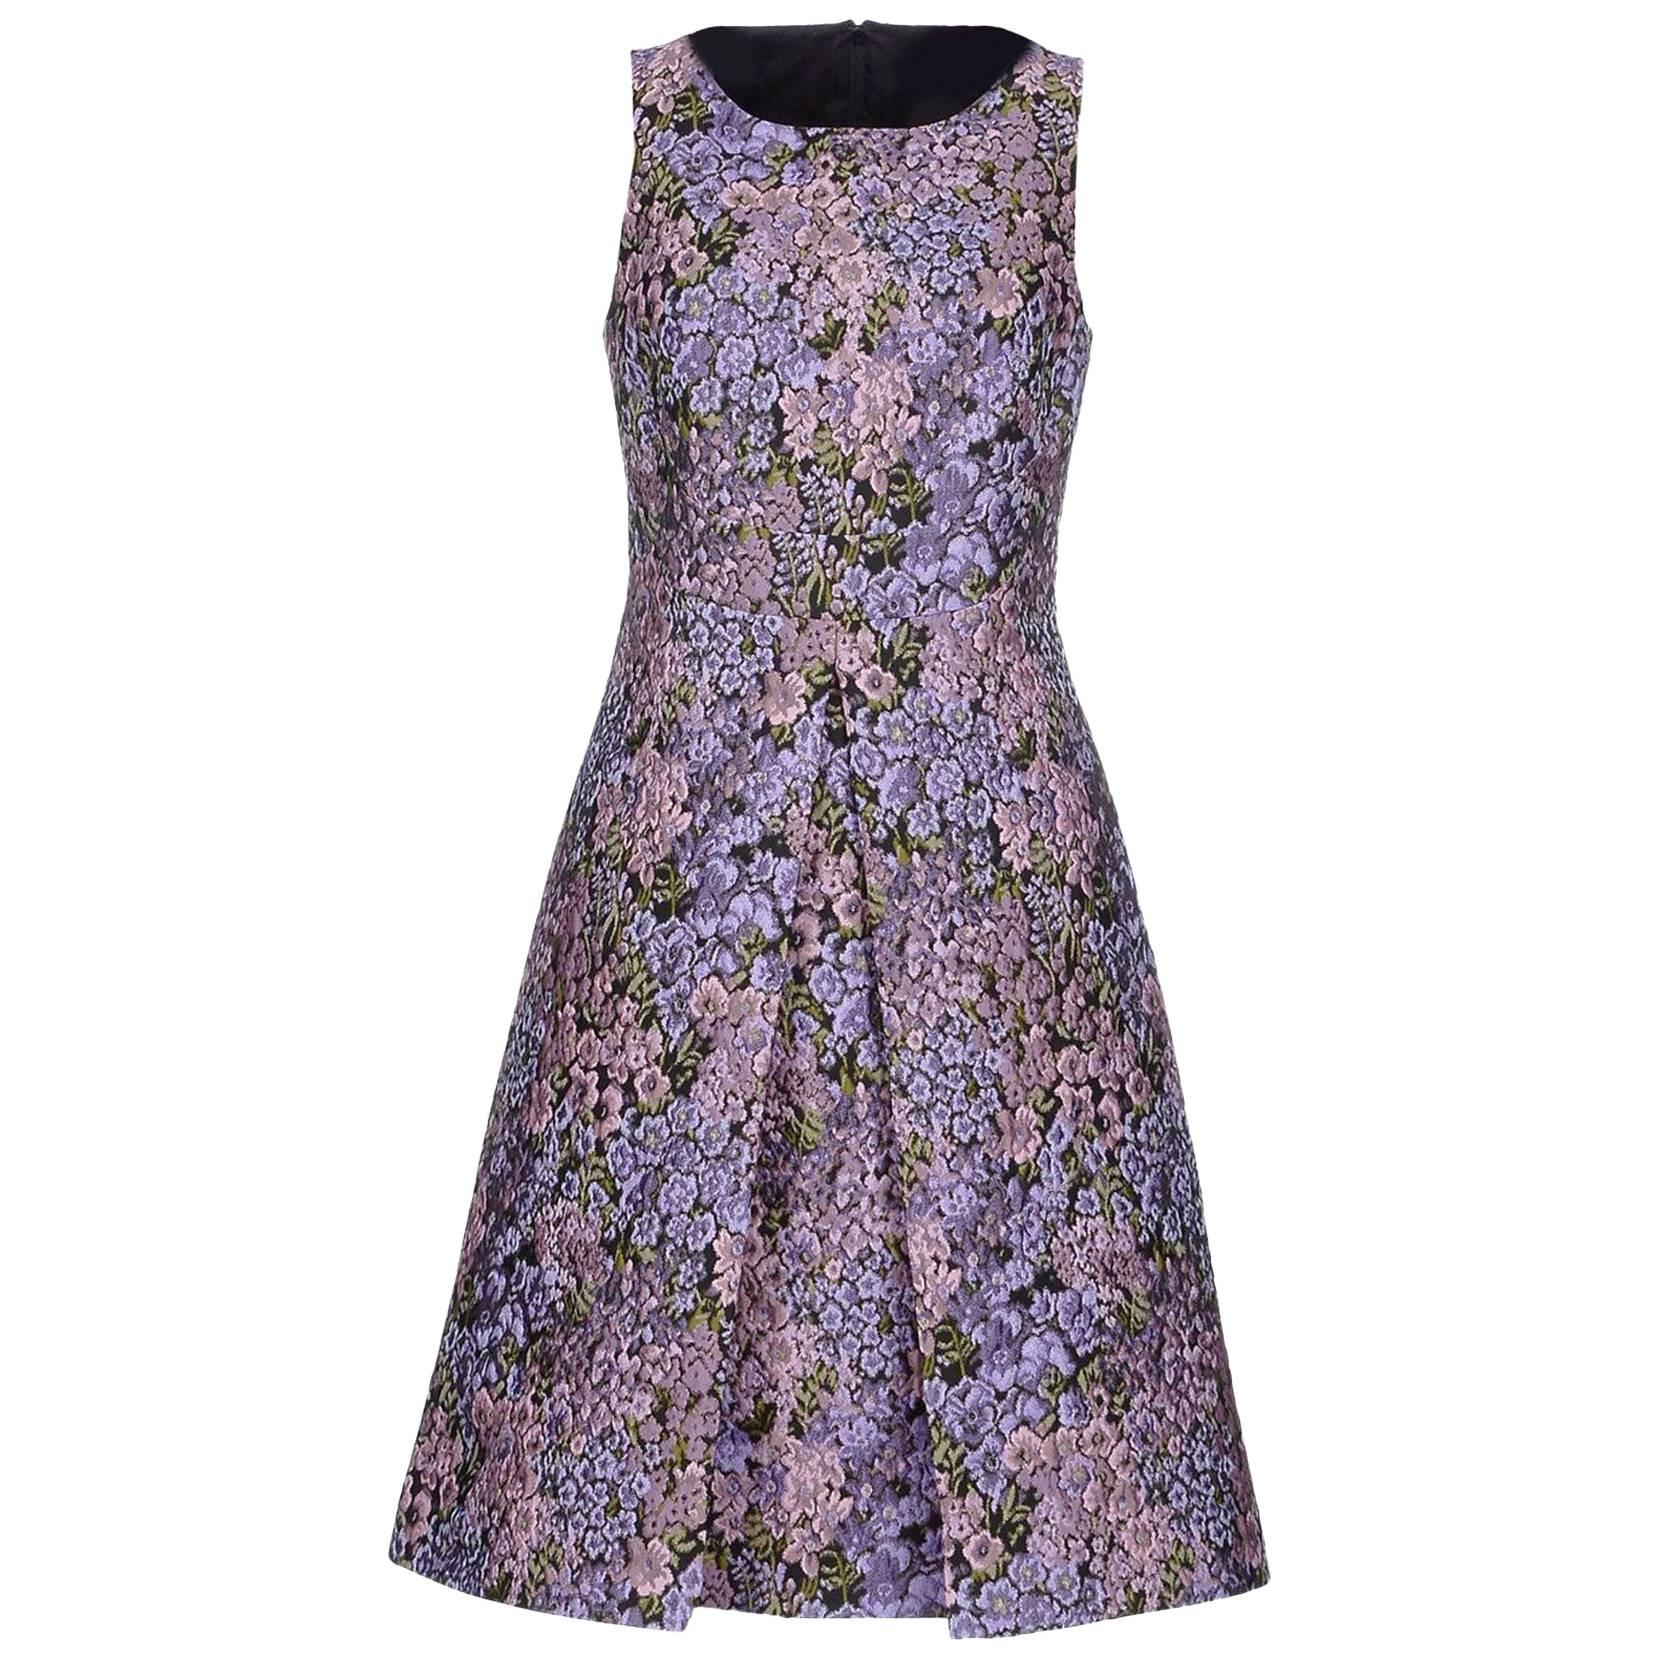 New MICHAEL KORS Jacquard Lilac Floral Design Dress size 12